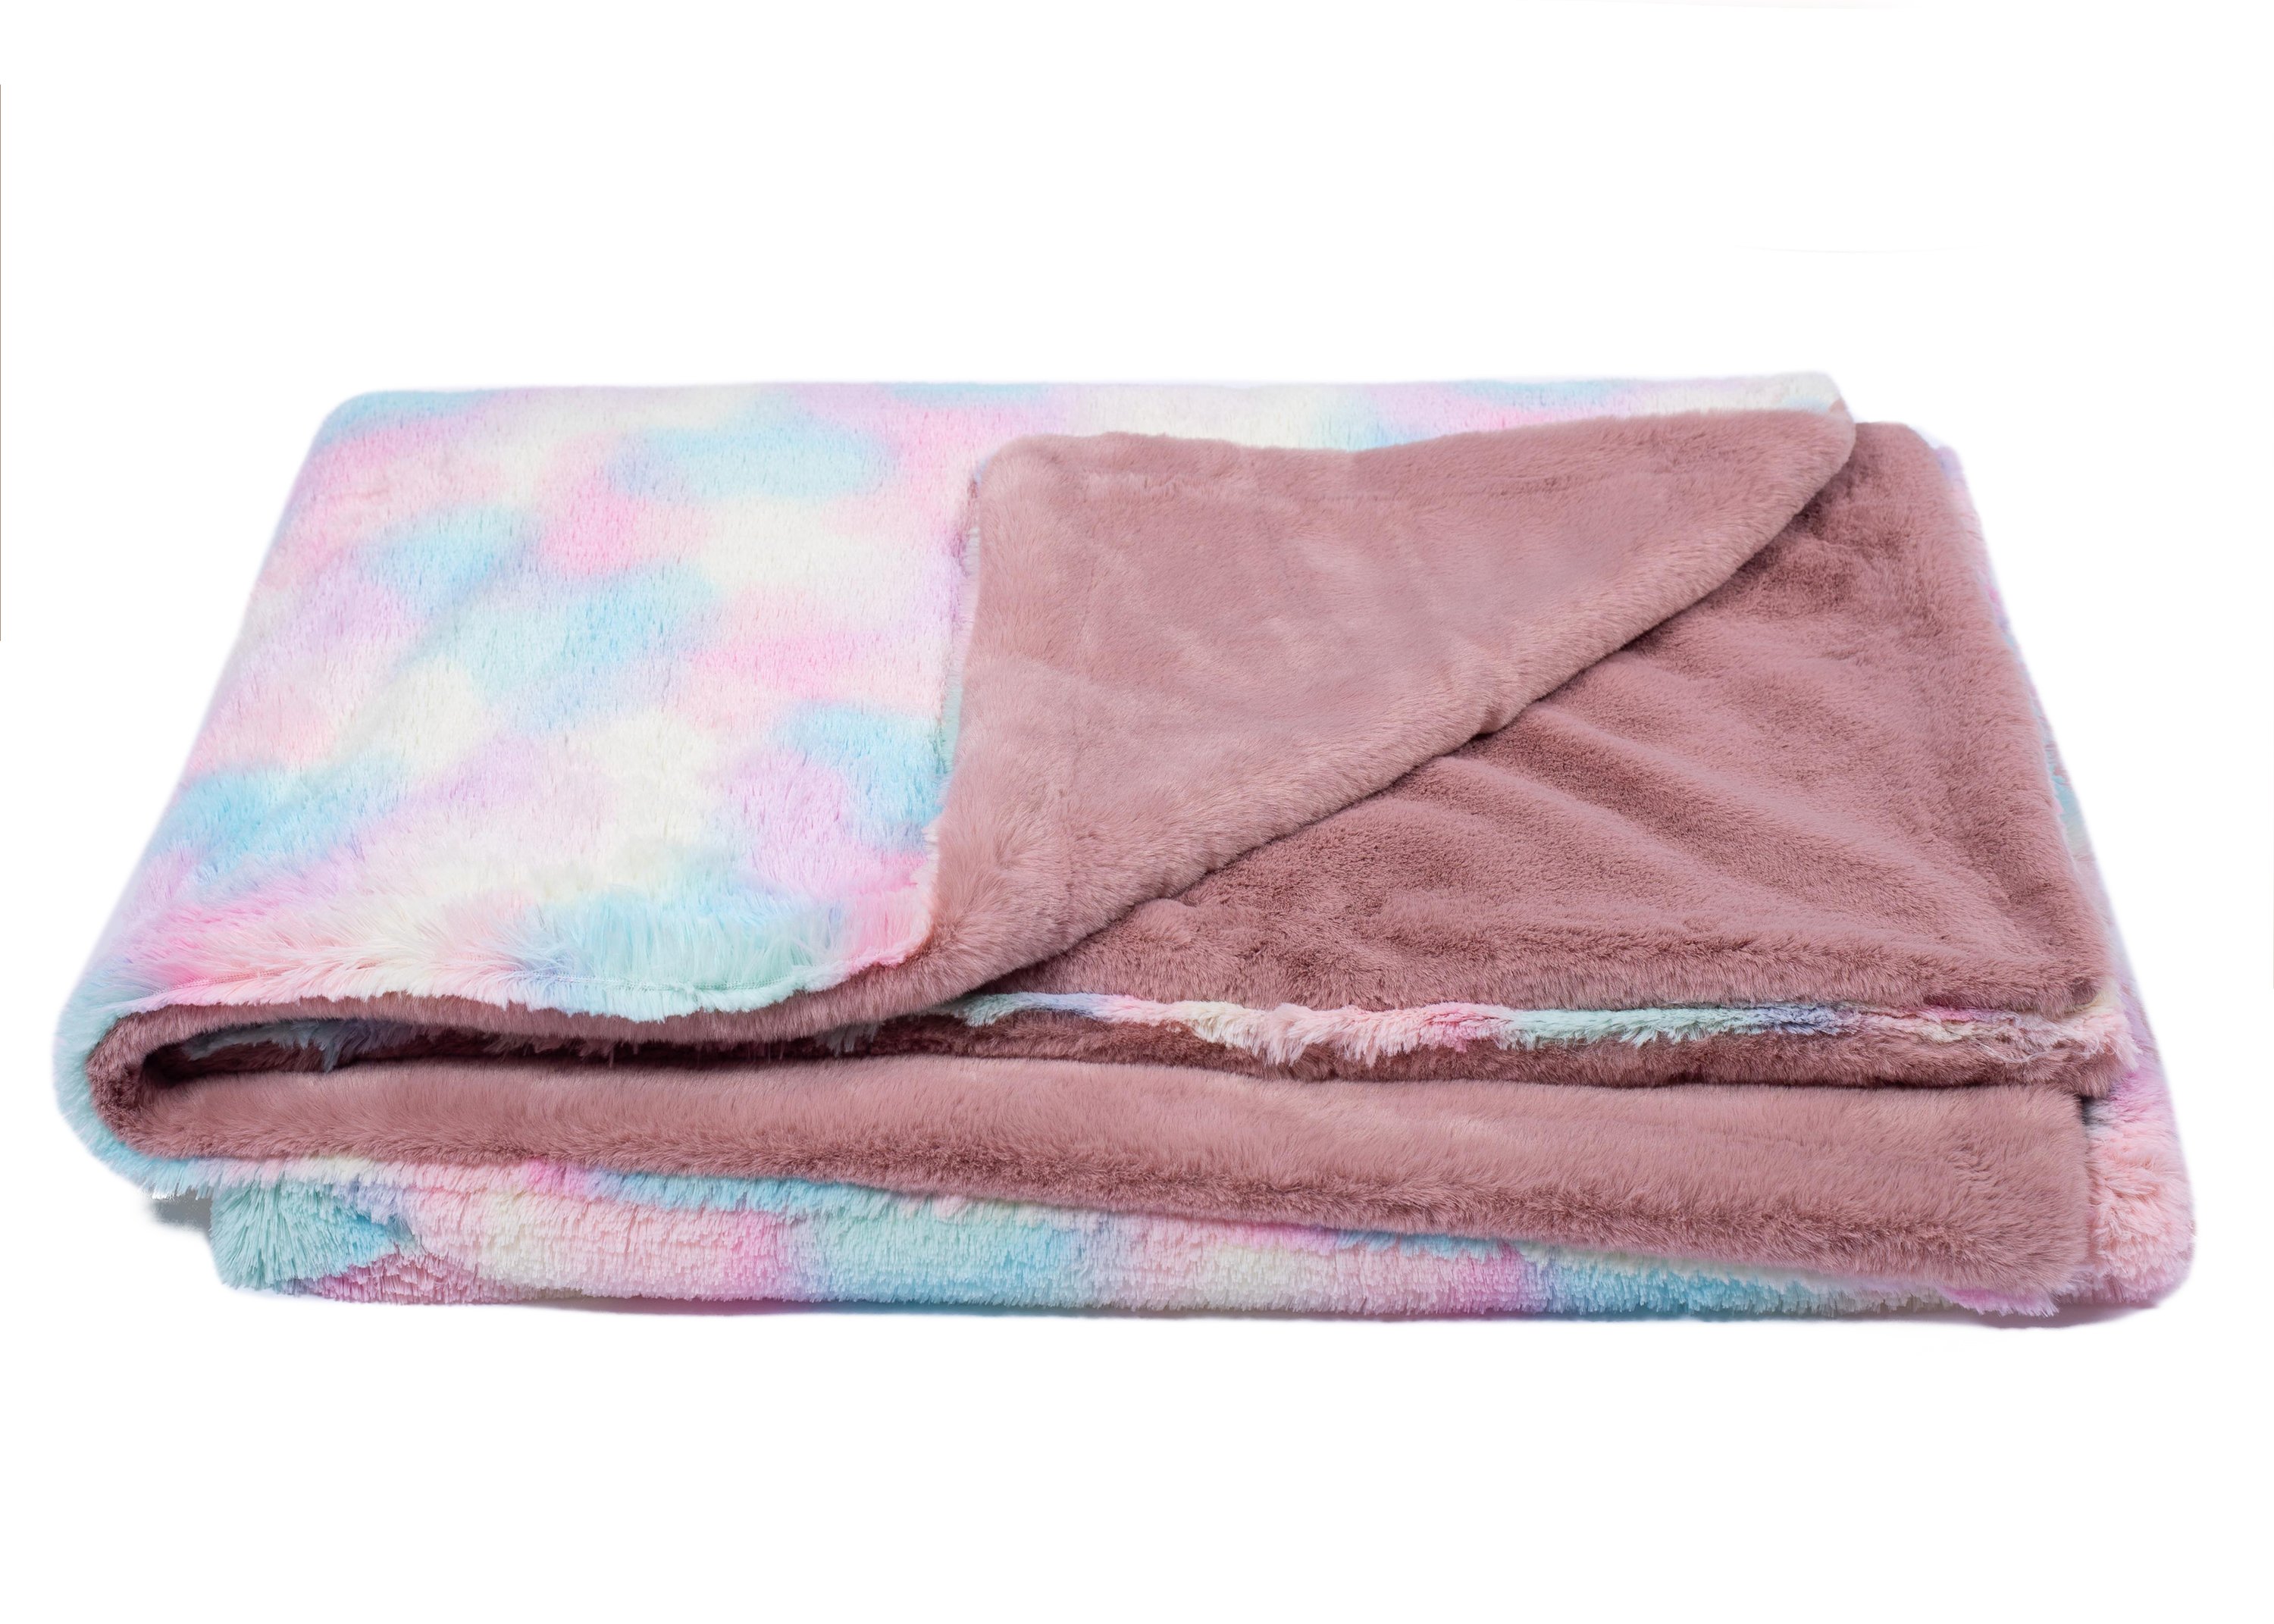 Sofa blanket LaLeLu/Pink